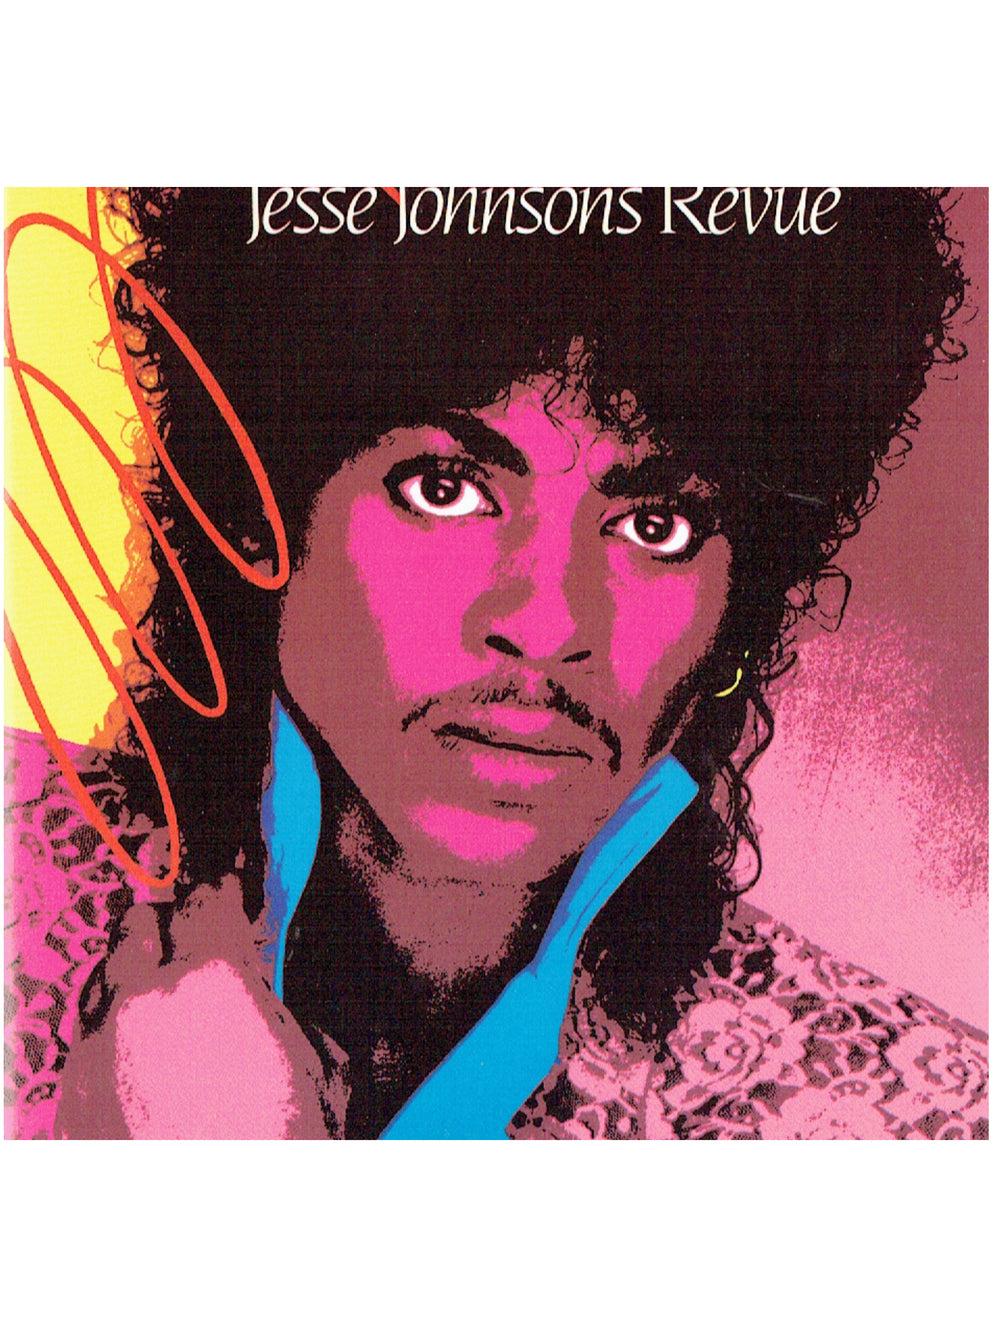 Prince – Jesse Johnson's Revue Self Titled CD Album 1985 Release Prince